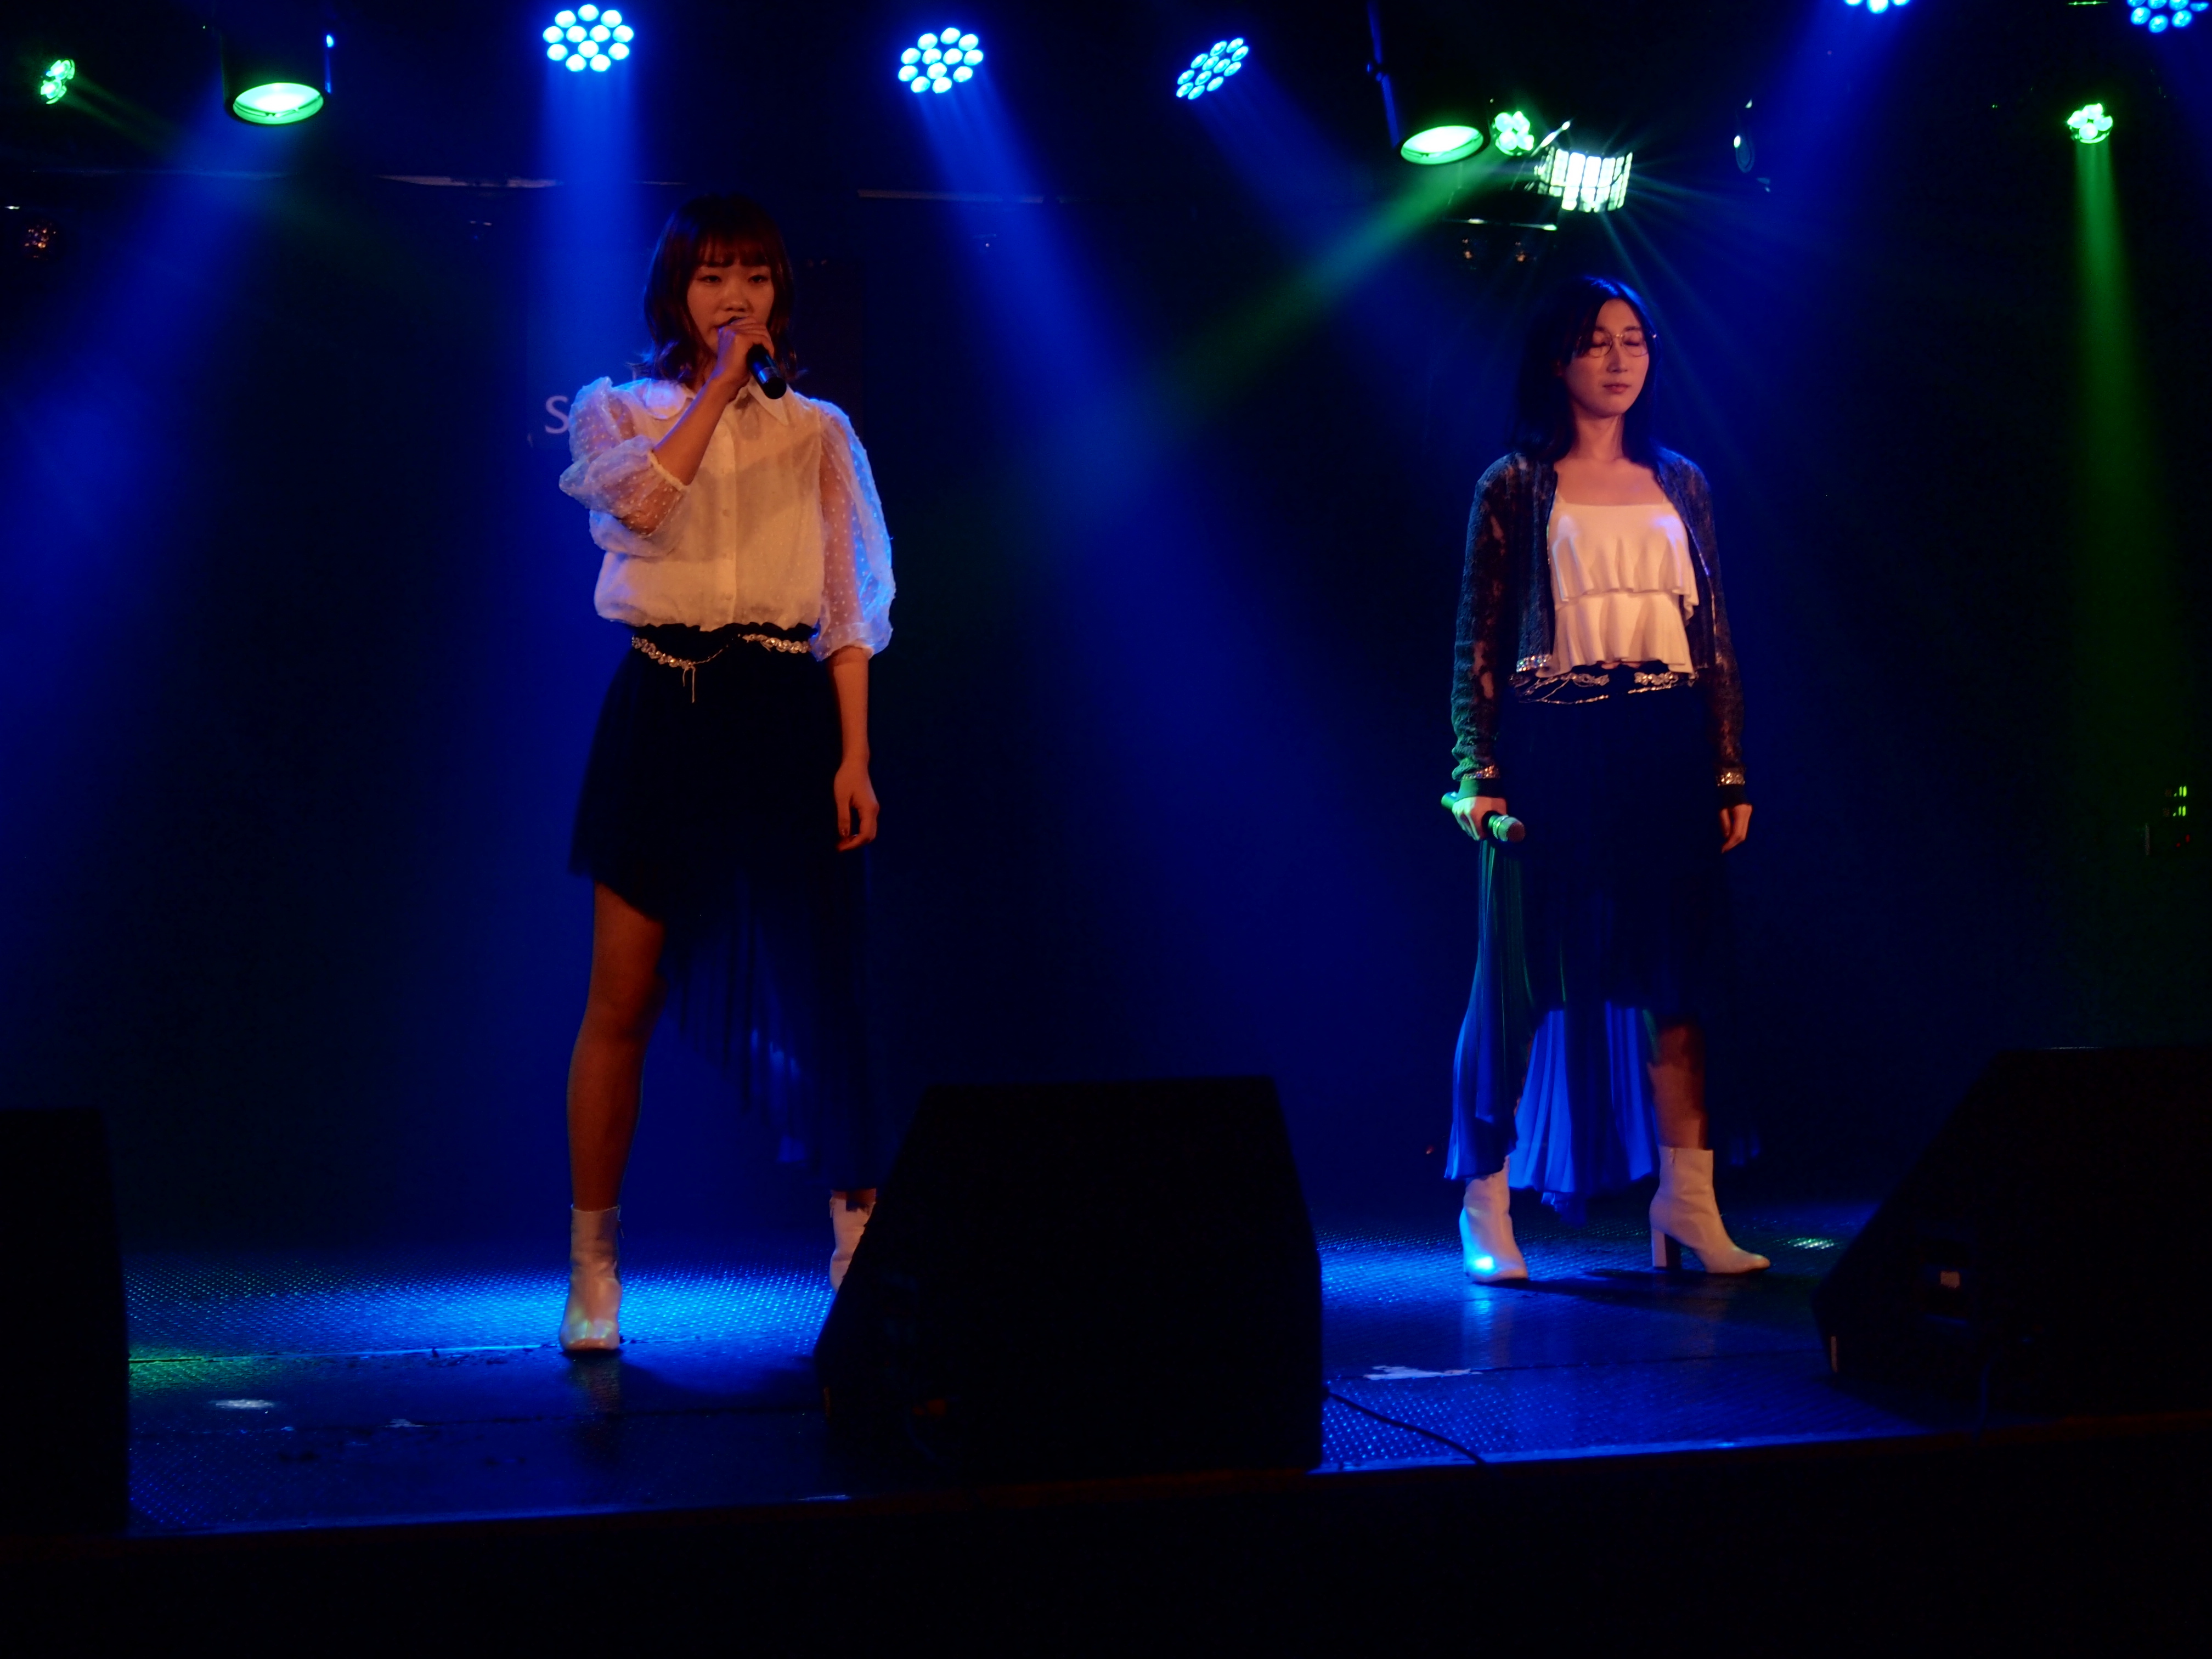 Akb48派生ユニット Diva 出身の二見夕貴がプロデュース 3人組アイドル 紗音都 が年1月に渋谷でデビュー決定 パインプレーリー合同会社のプレスリリース